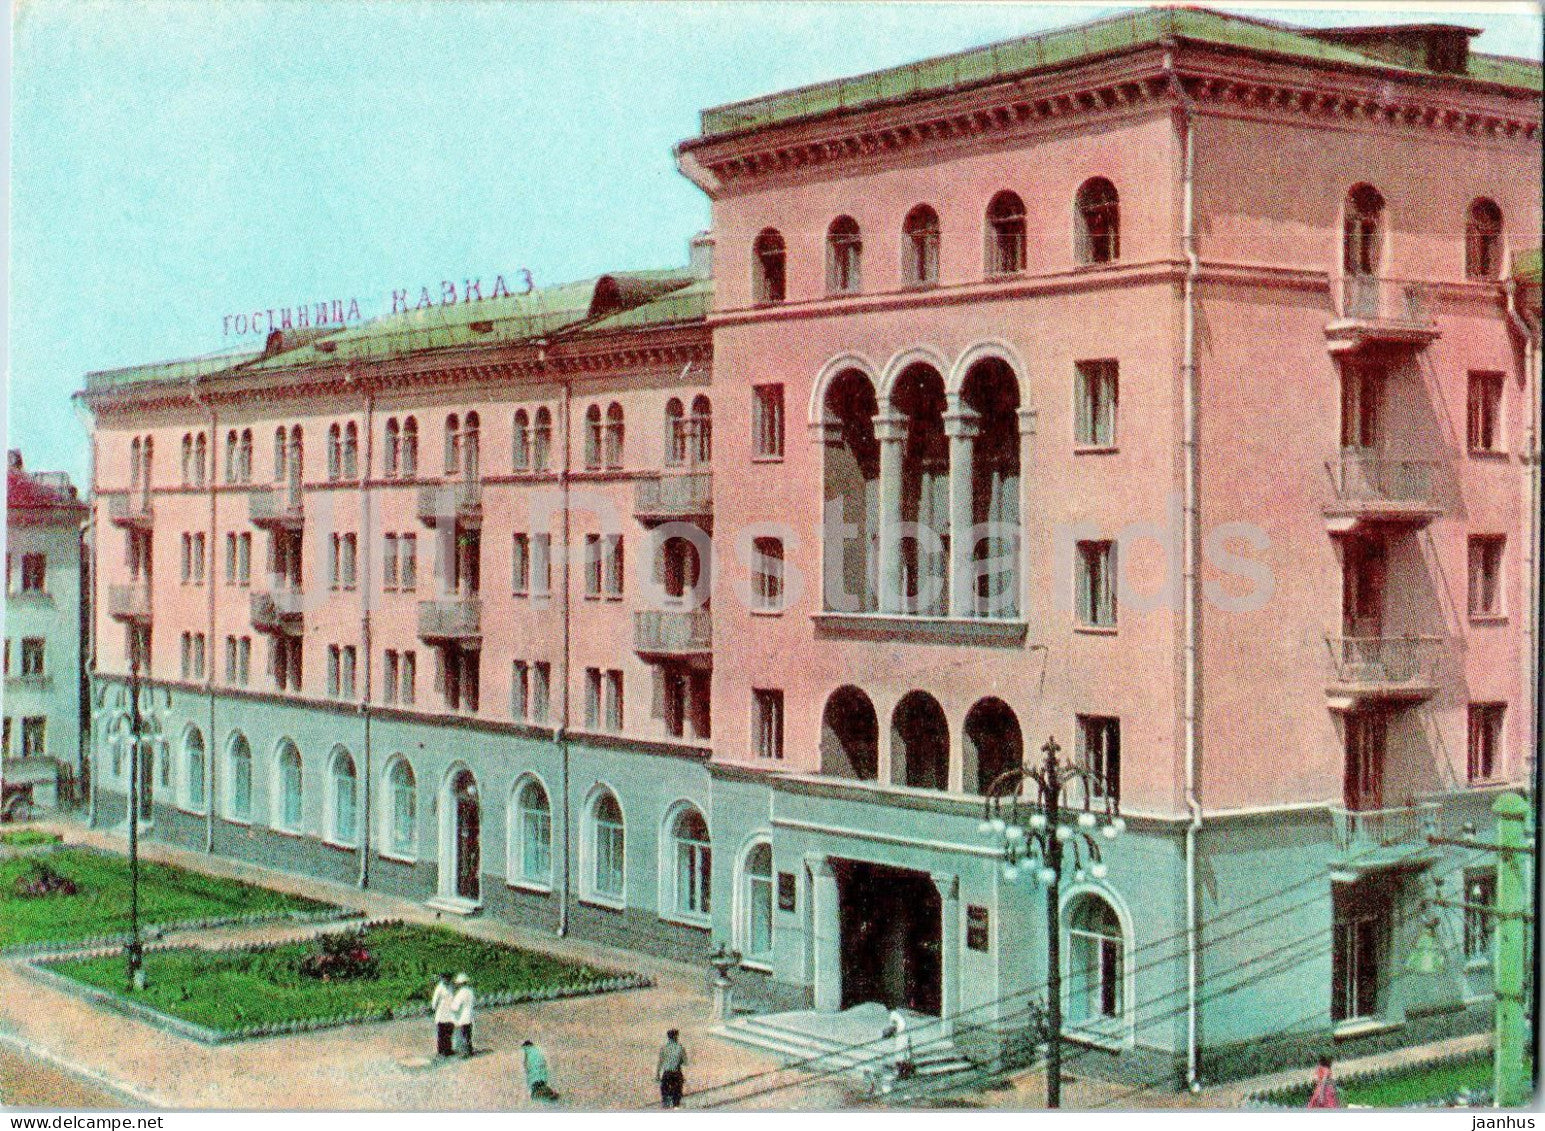 Vladikavkaz - Ordzhonikidze - hotel Kavkaz (Caucasus) - 1964 - Russia USSR - unused - JH Postcards